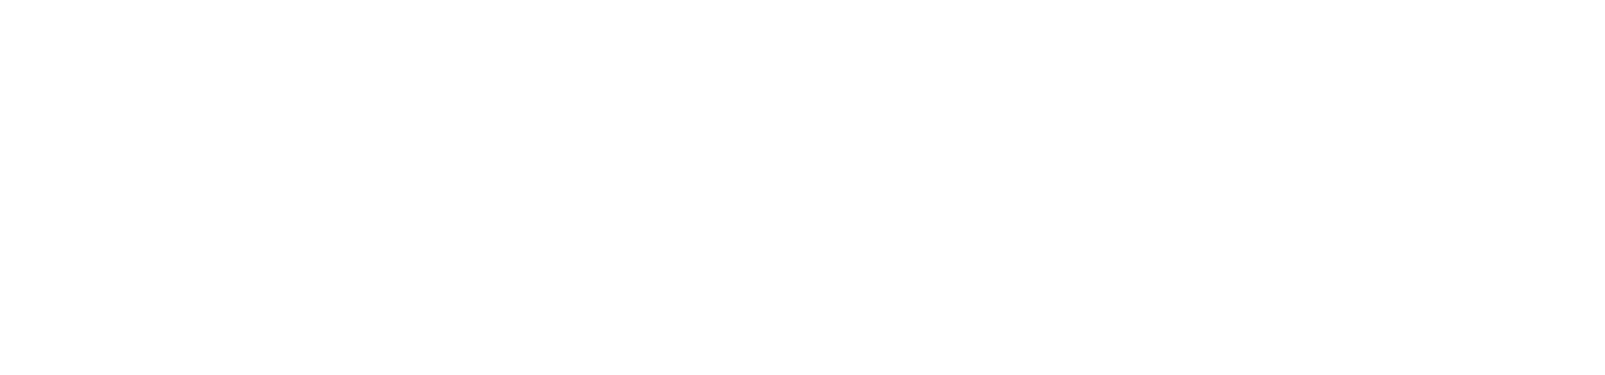 Capstone Green Energy Logo groß für dunkle Hintergründe (transparentes PNG)